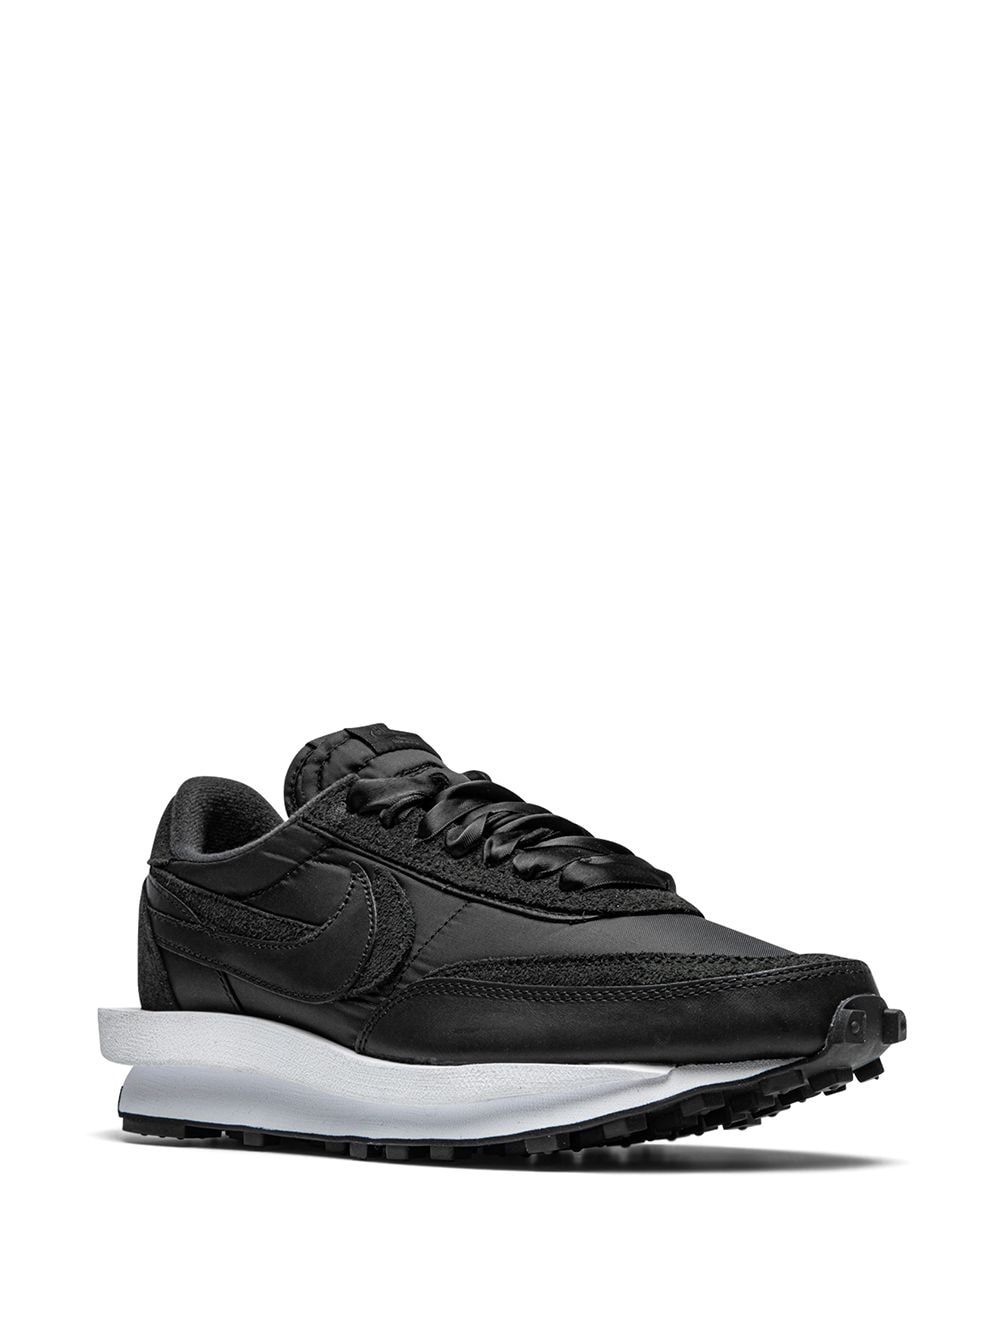 Nike LDWaffle Black Nylon スニーカーの画像2 